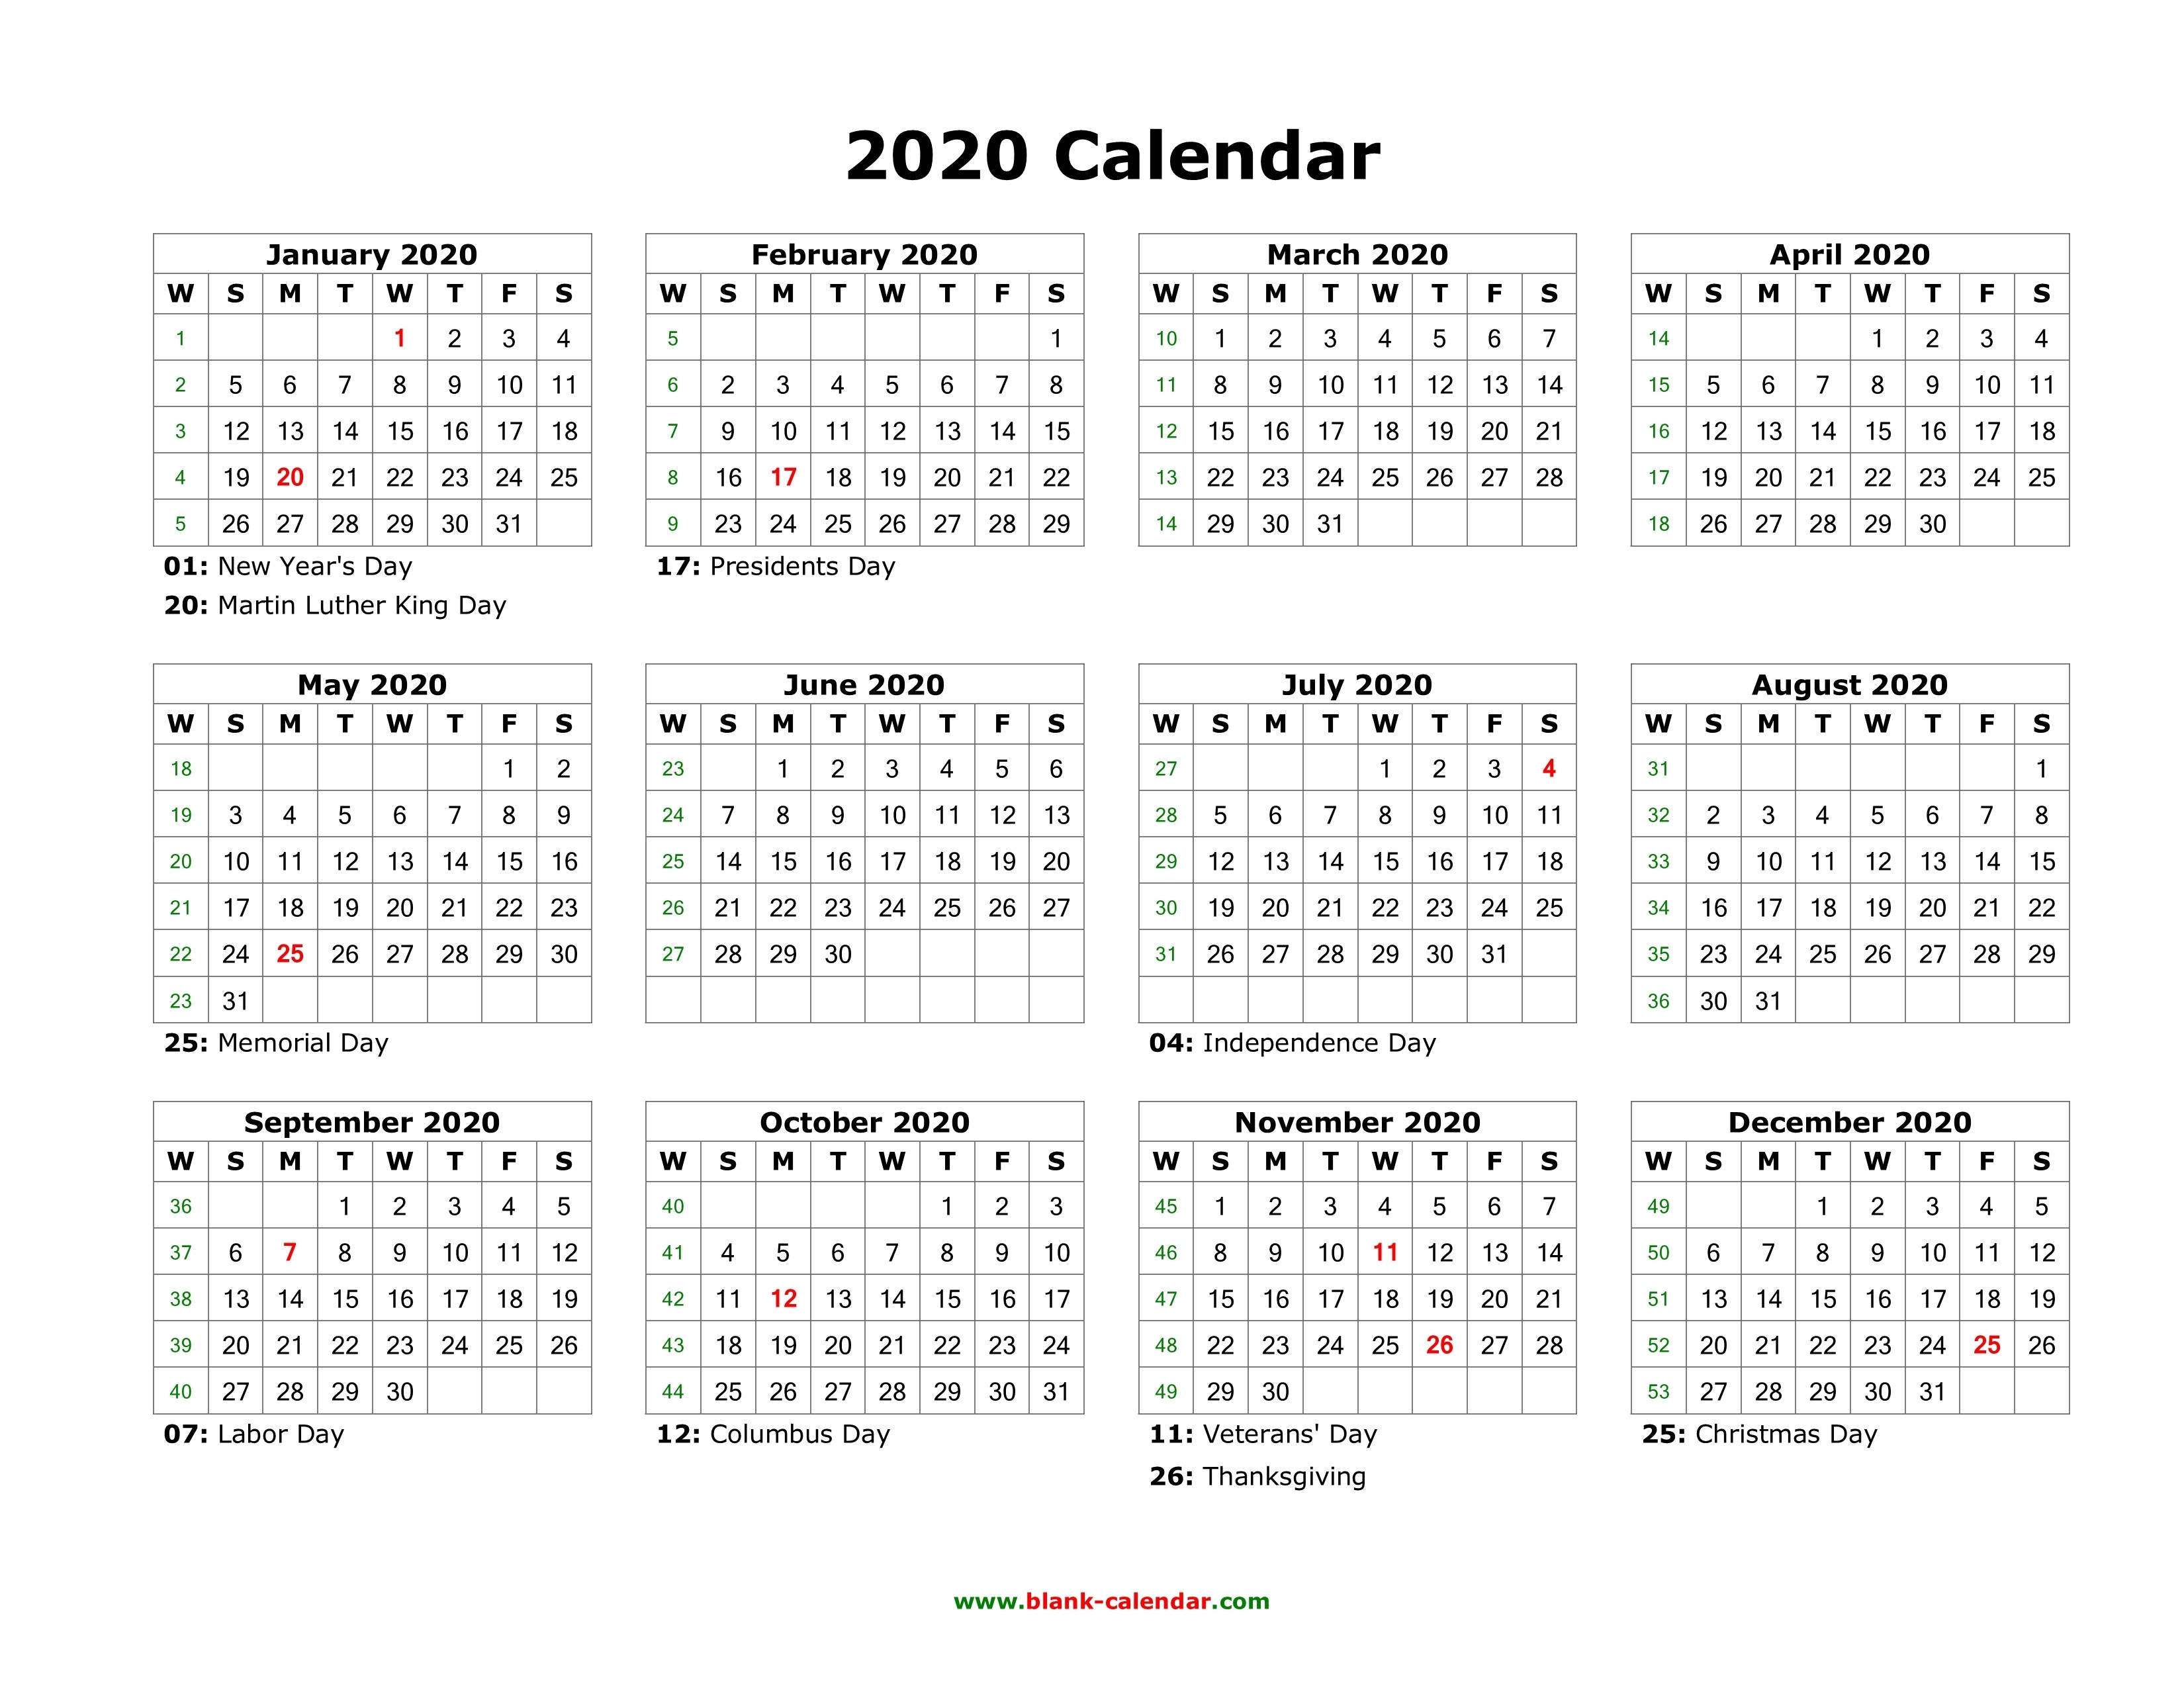 Blank Calendar 2020 | Free Download Calendar Templates-12 Month Blank Calendar 2020 Printable